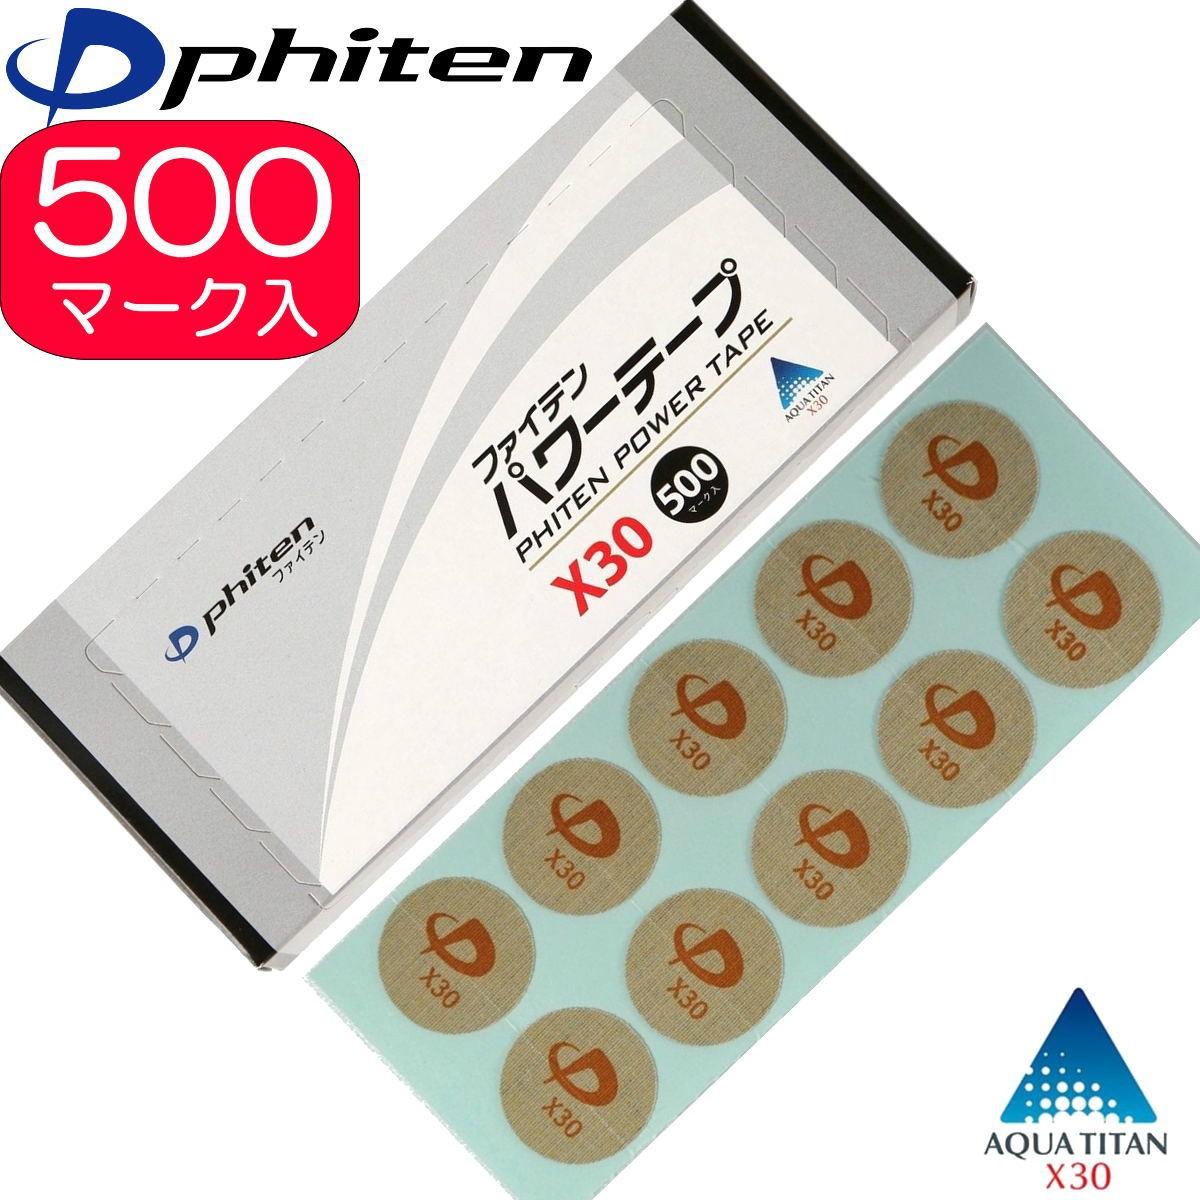 Phiten | パワーテープ X30 | 500マーク入 | 10シール×50シート | 濃度